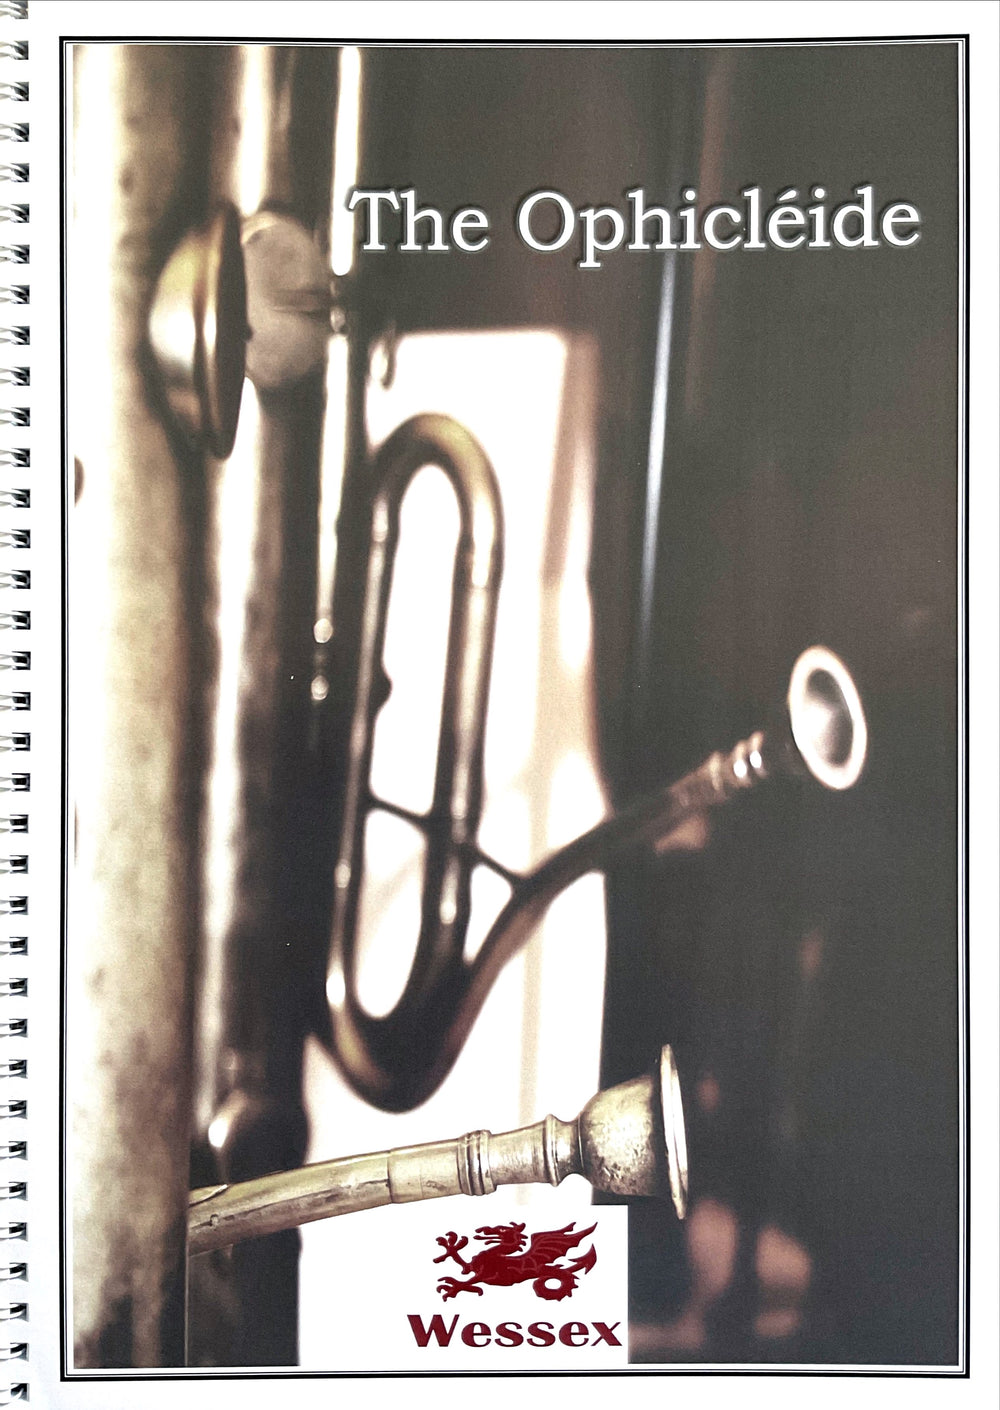 The Ophicleide - libro (por Tony George)